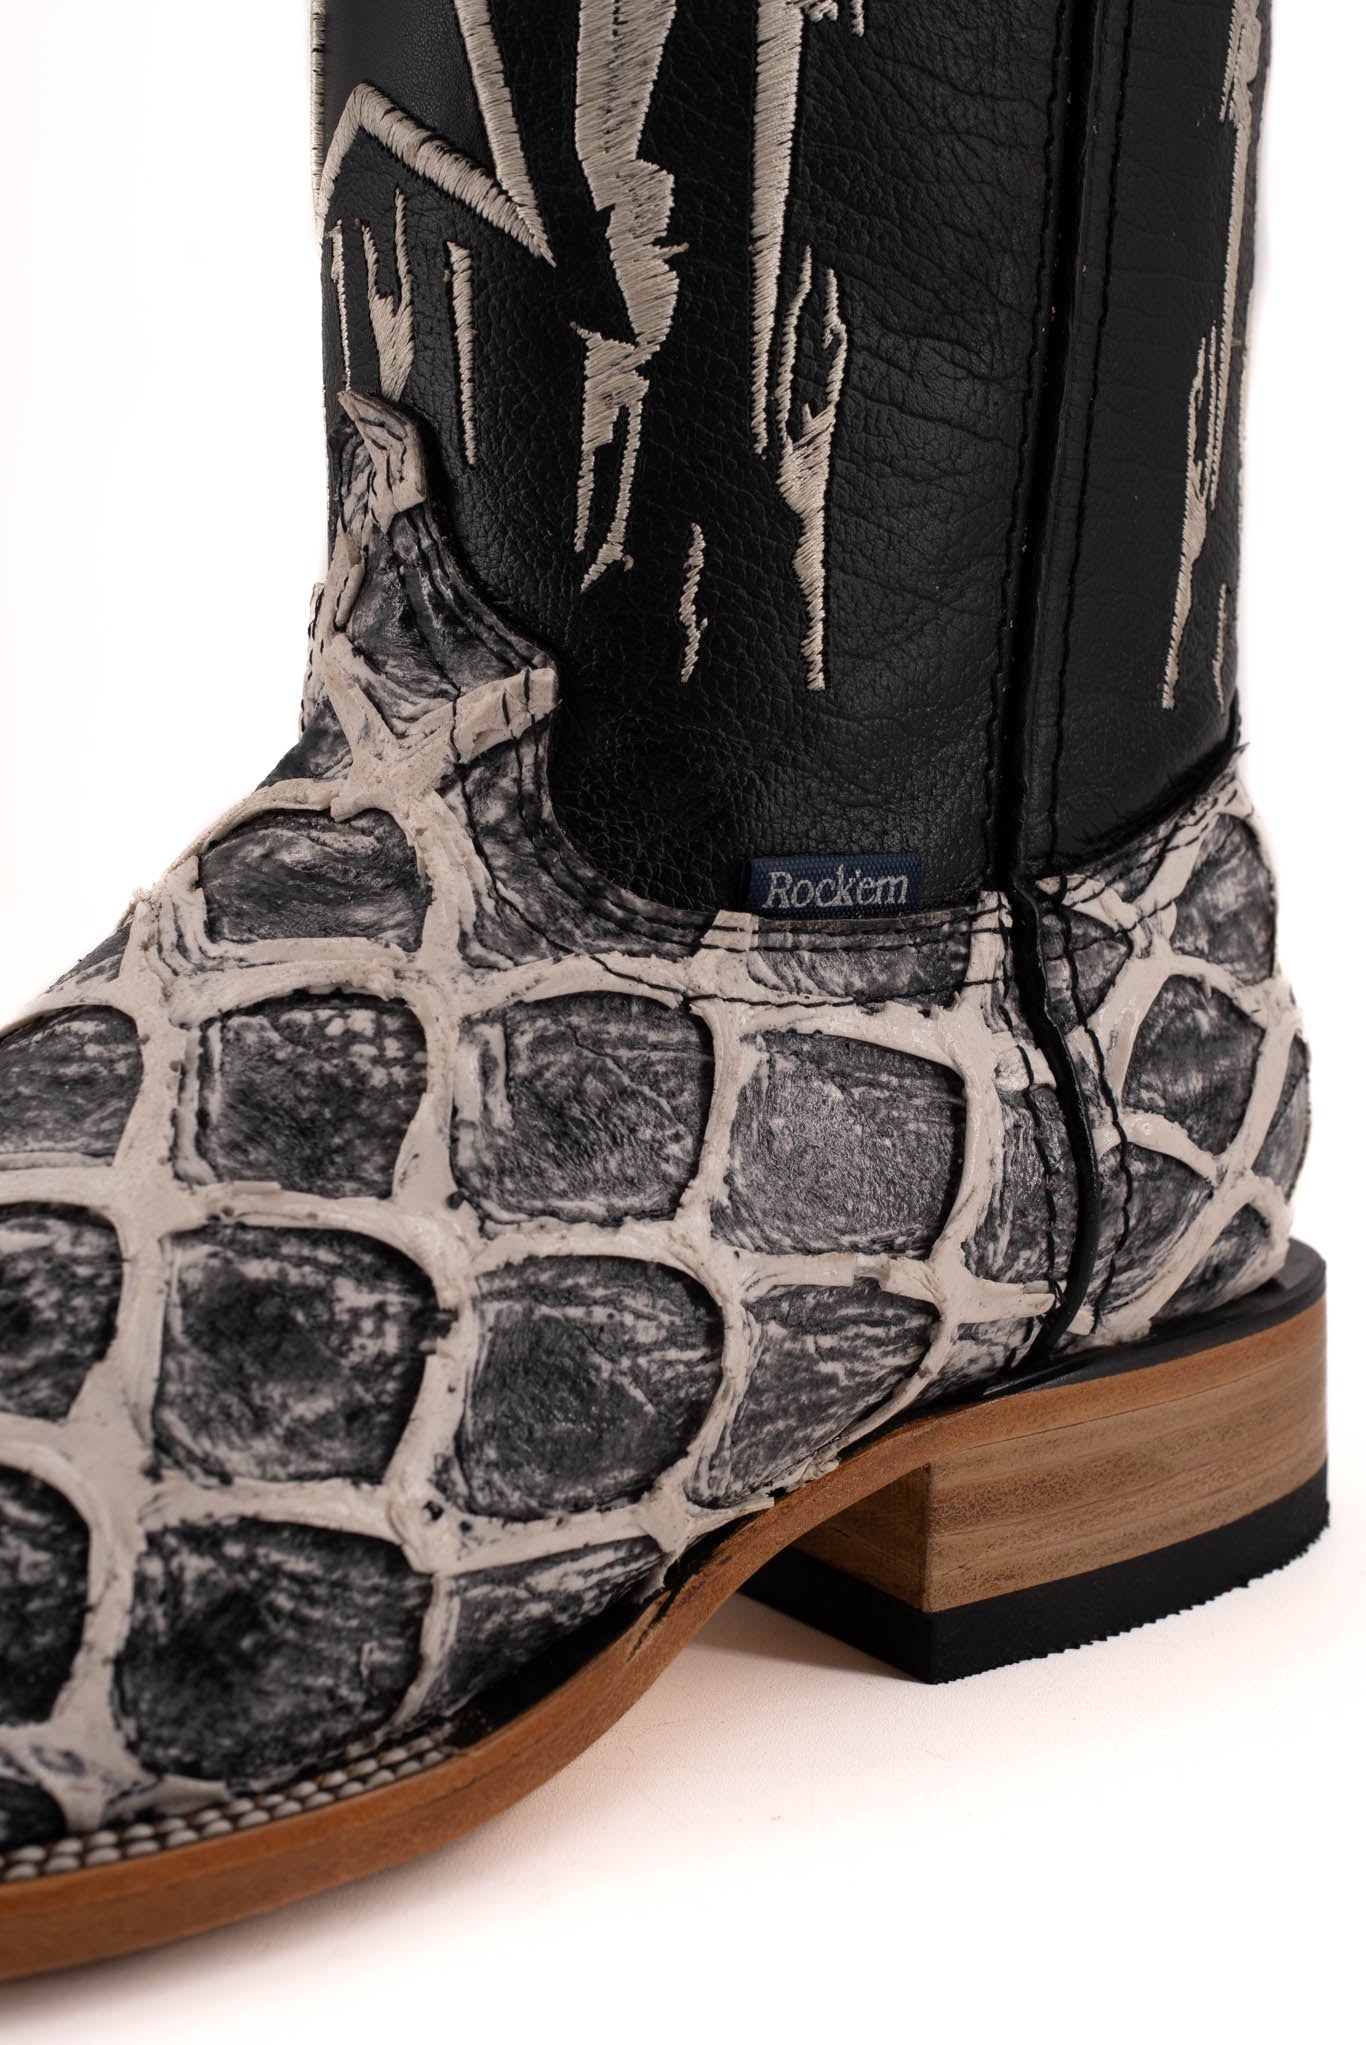 Clon Fish Pirarucu Square Toe Cowboy Boots